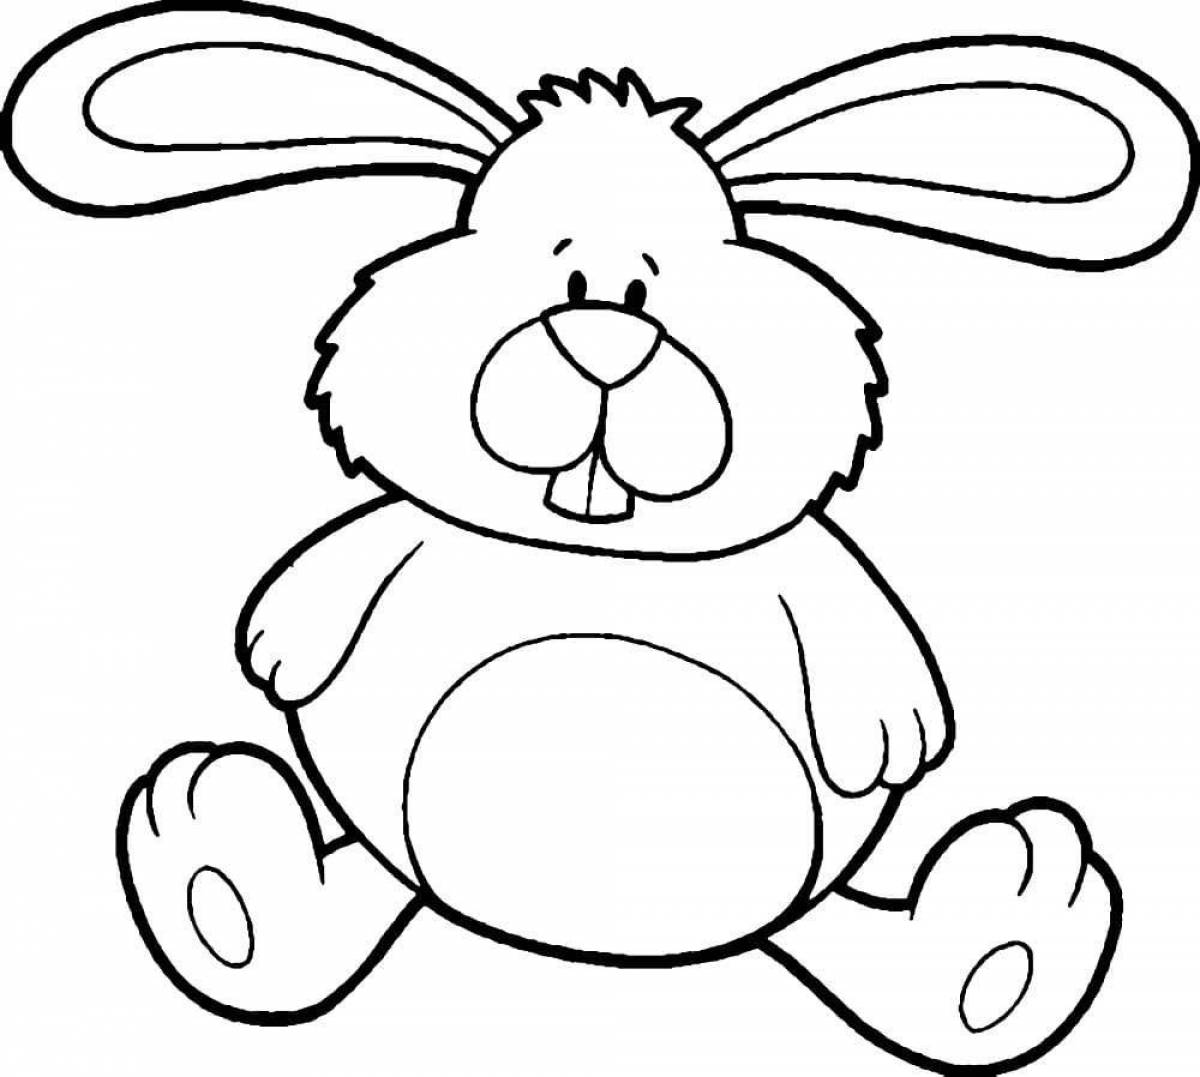 Joyful bunny coloring book for kids